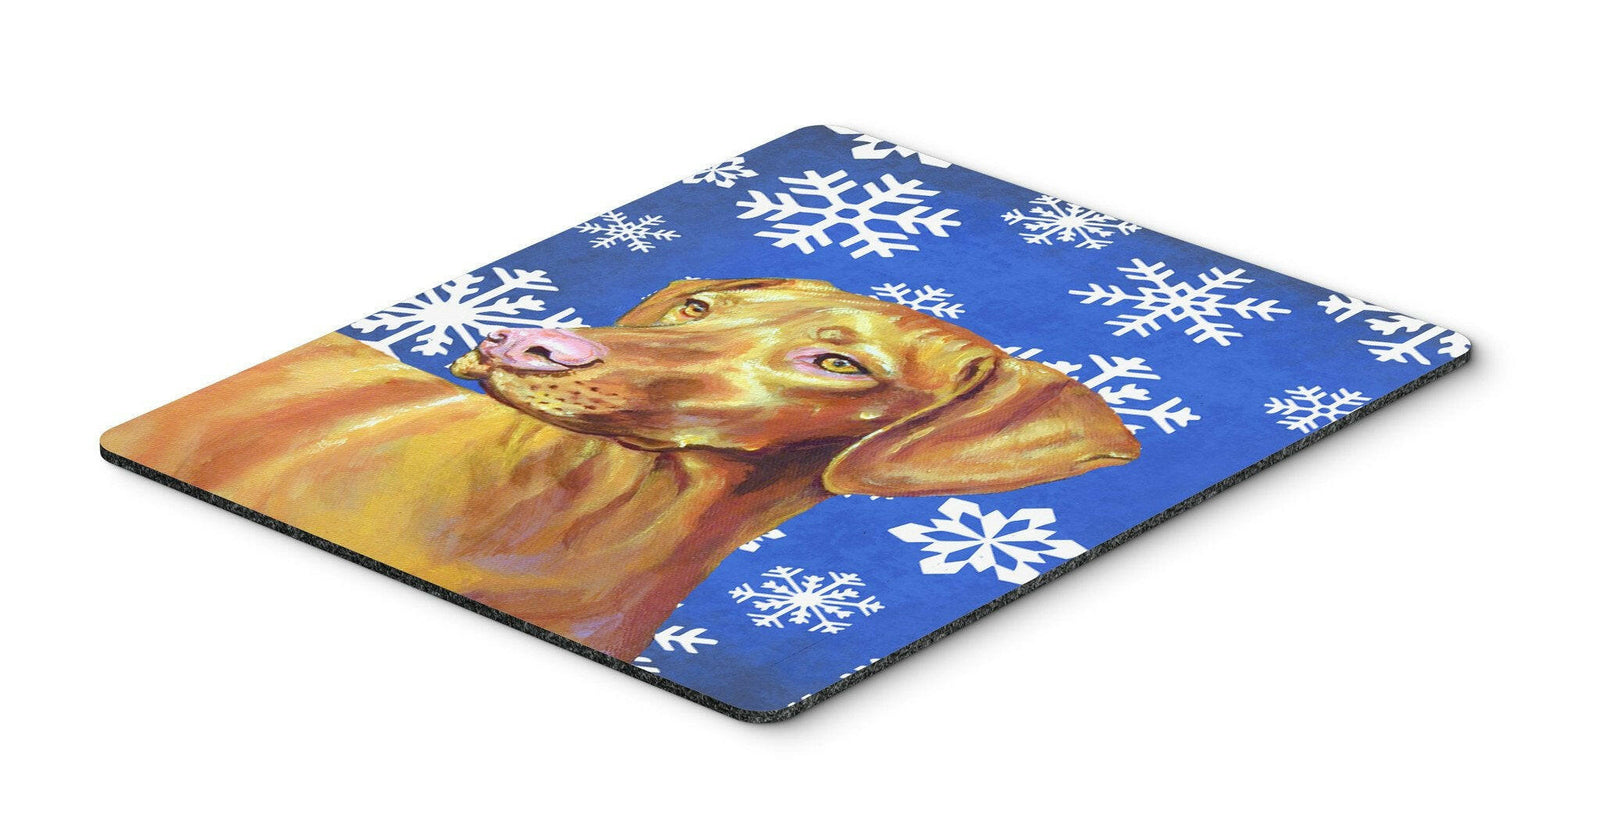 Vizsla Winter Snowflakes Holiday Mouse Pad, Hot Pad or Trivet by Caroline's Treasures